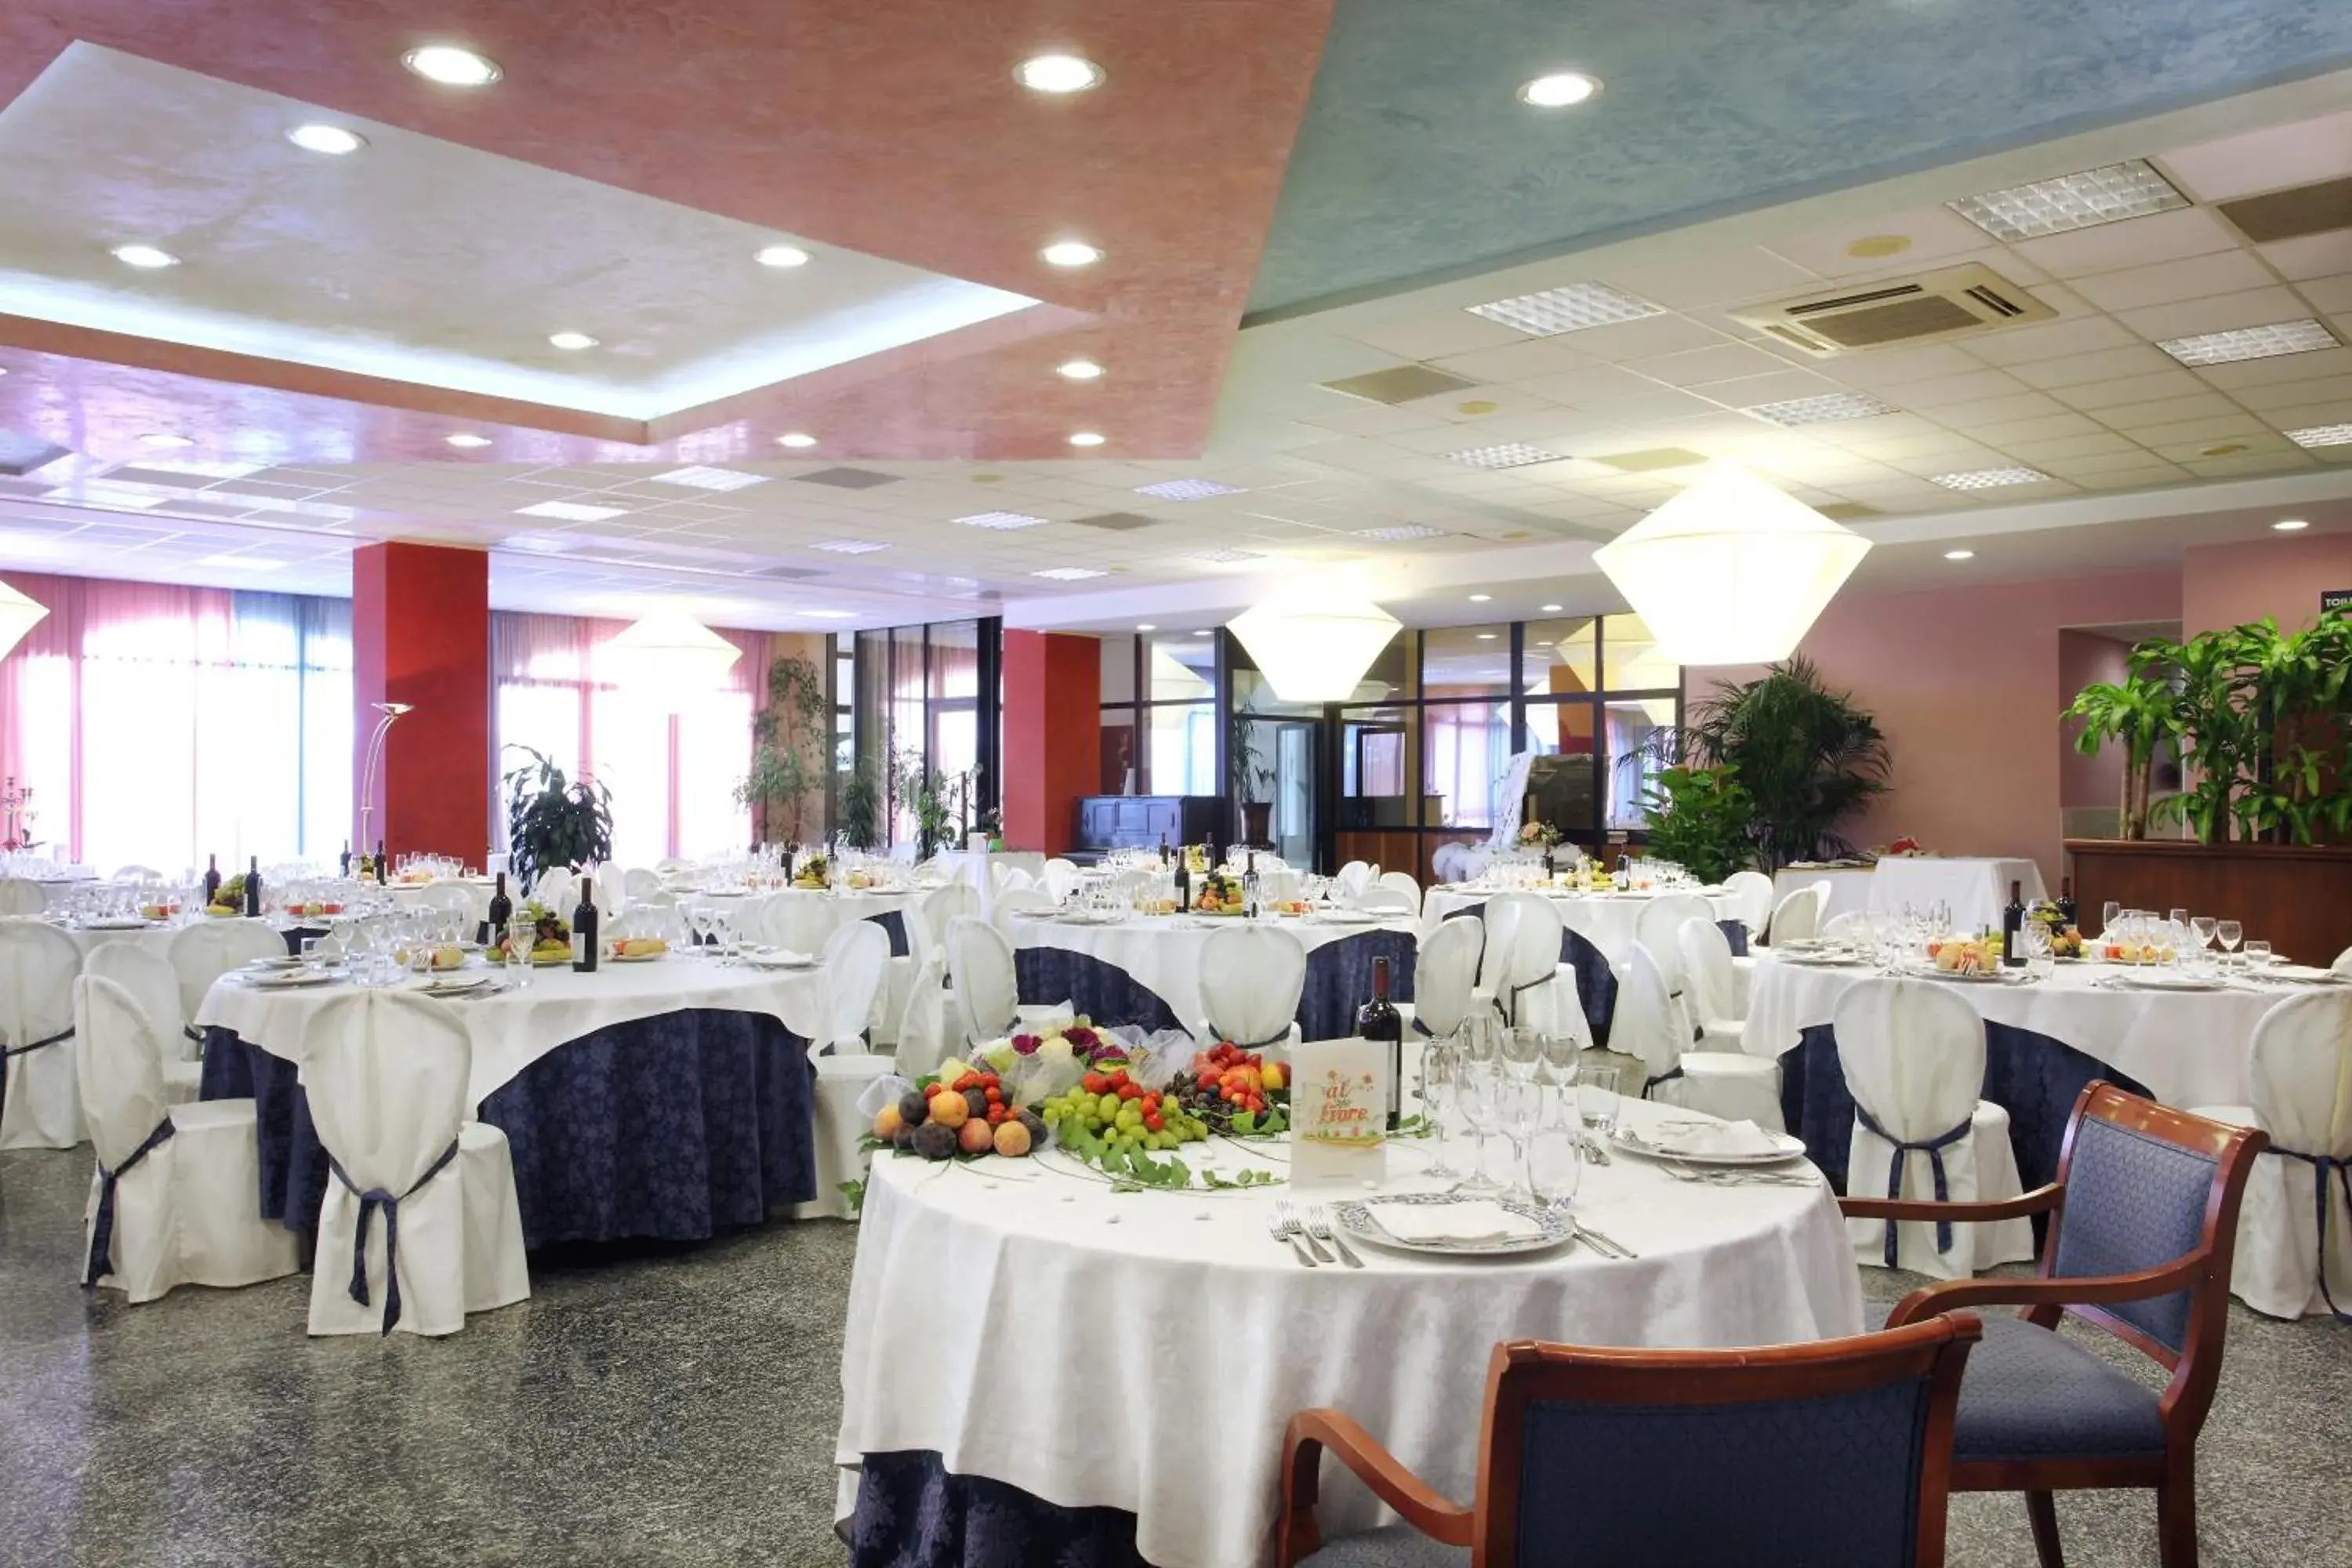 Restaurant/places to eat, Banquet Facilities in Hotel Ristorante Al Fiore